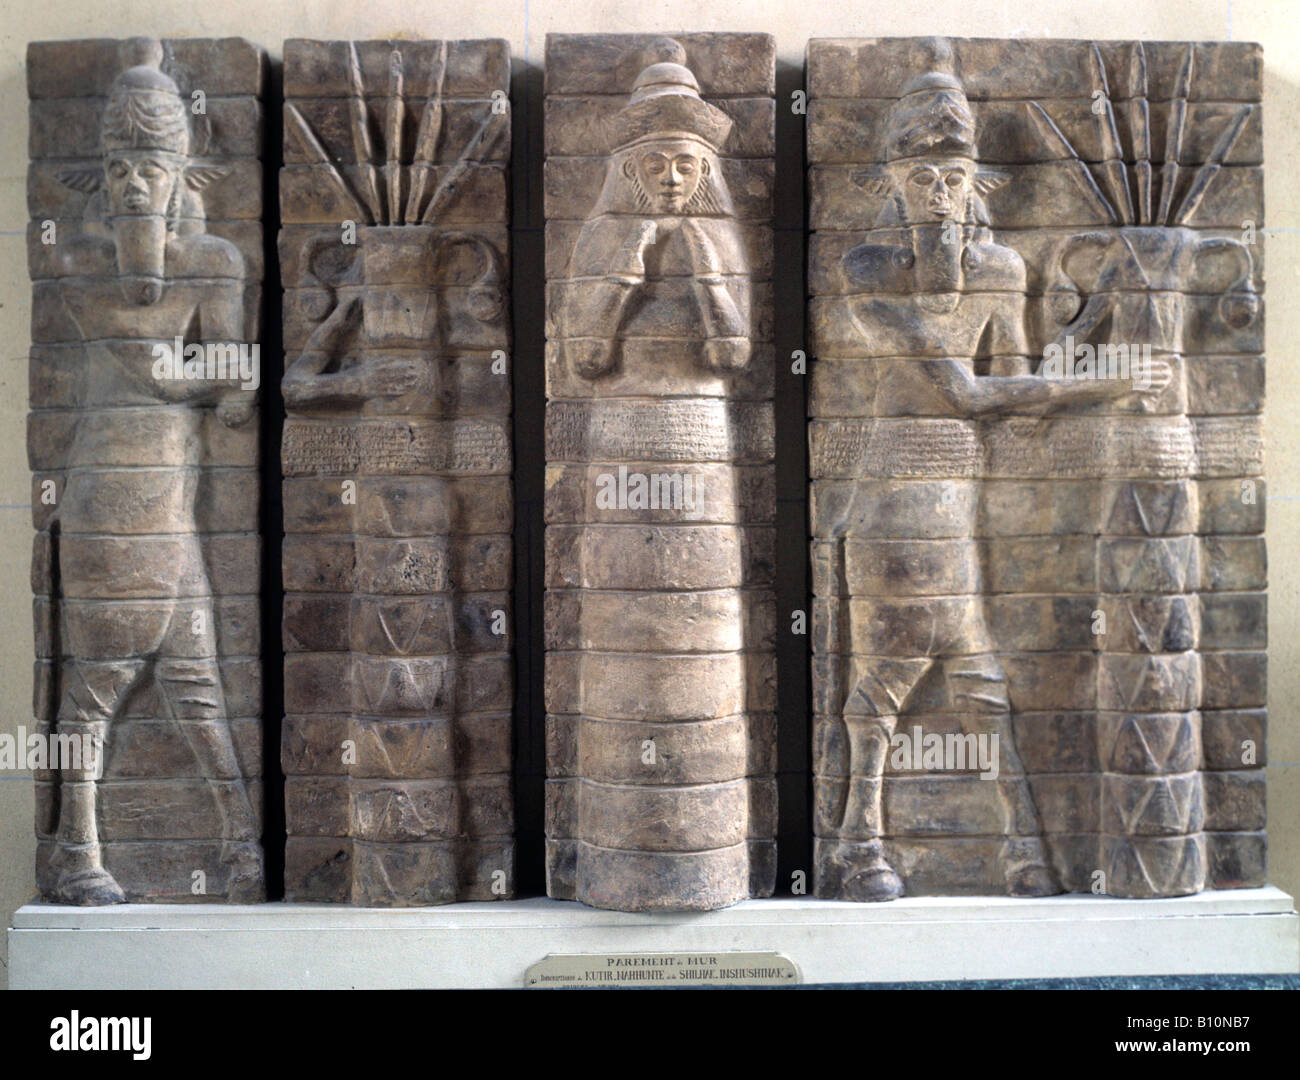 Panel of relief from Susa. 1200 BC.  Kutir Nahunte, Shilhak Inshushinak. Mesopotamia Stock Photo